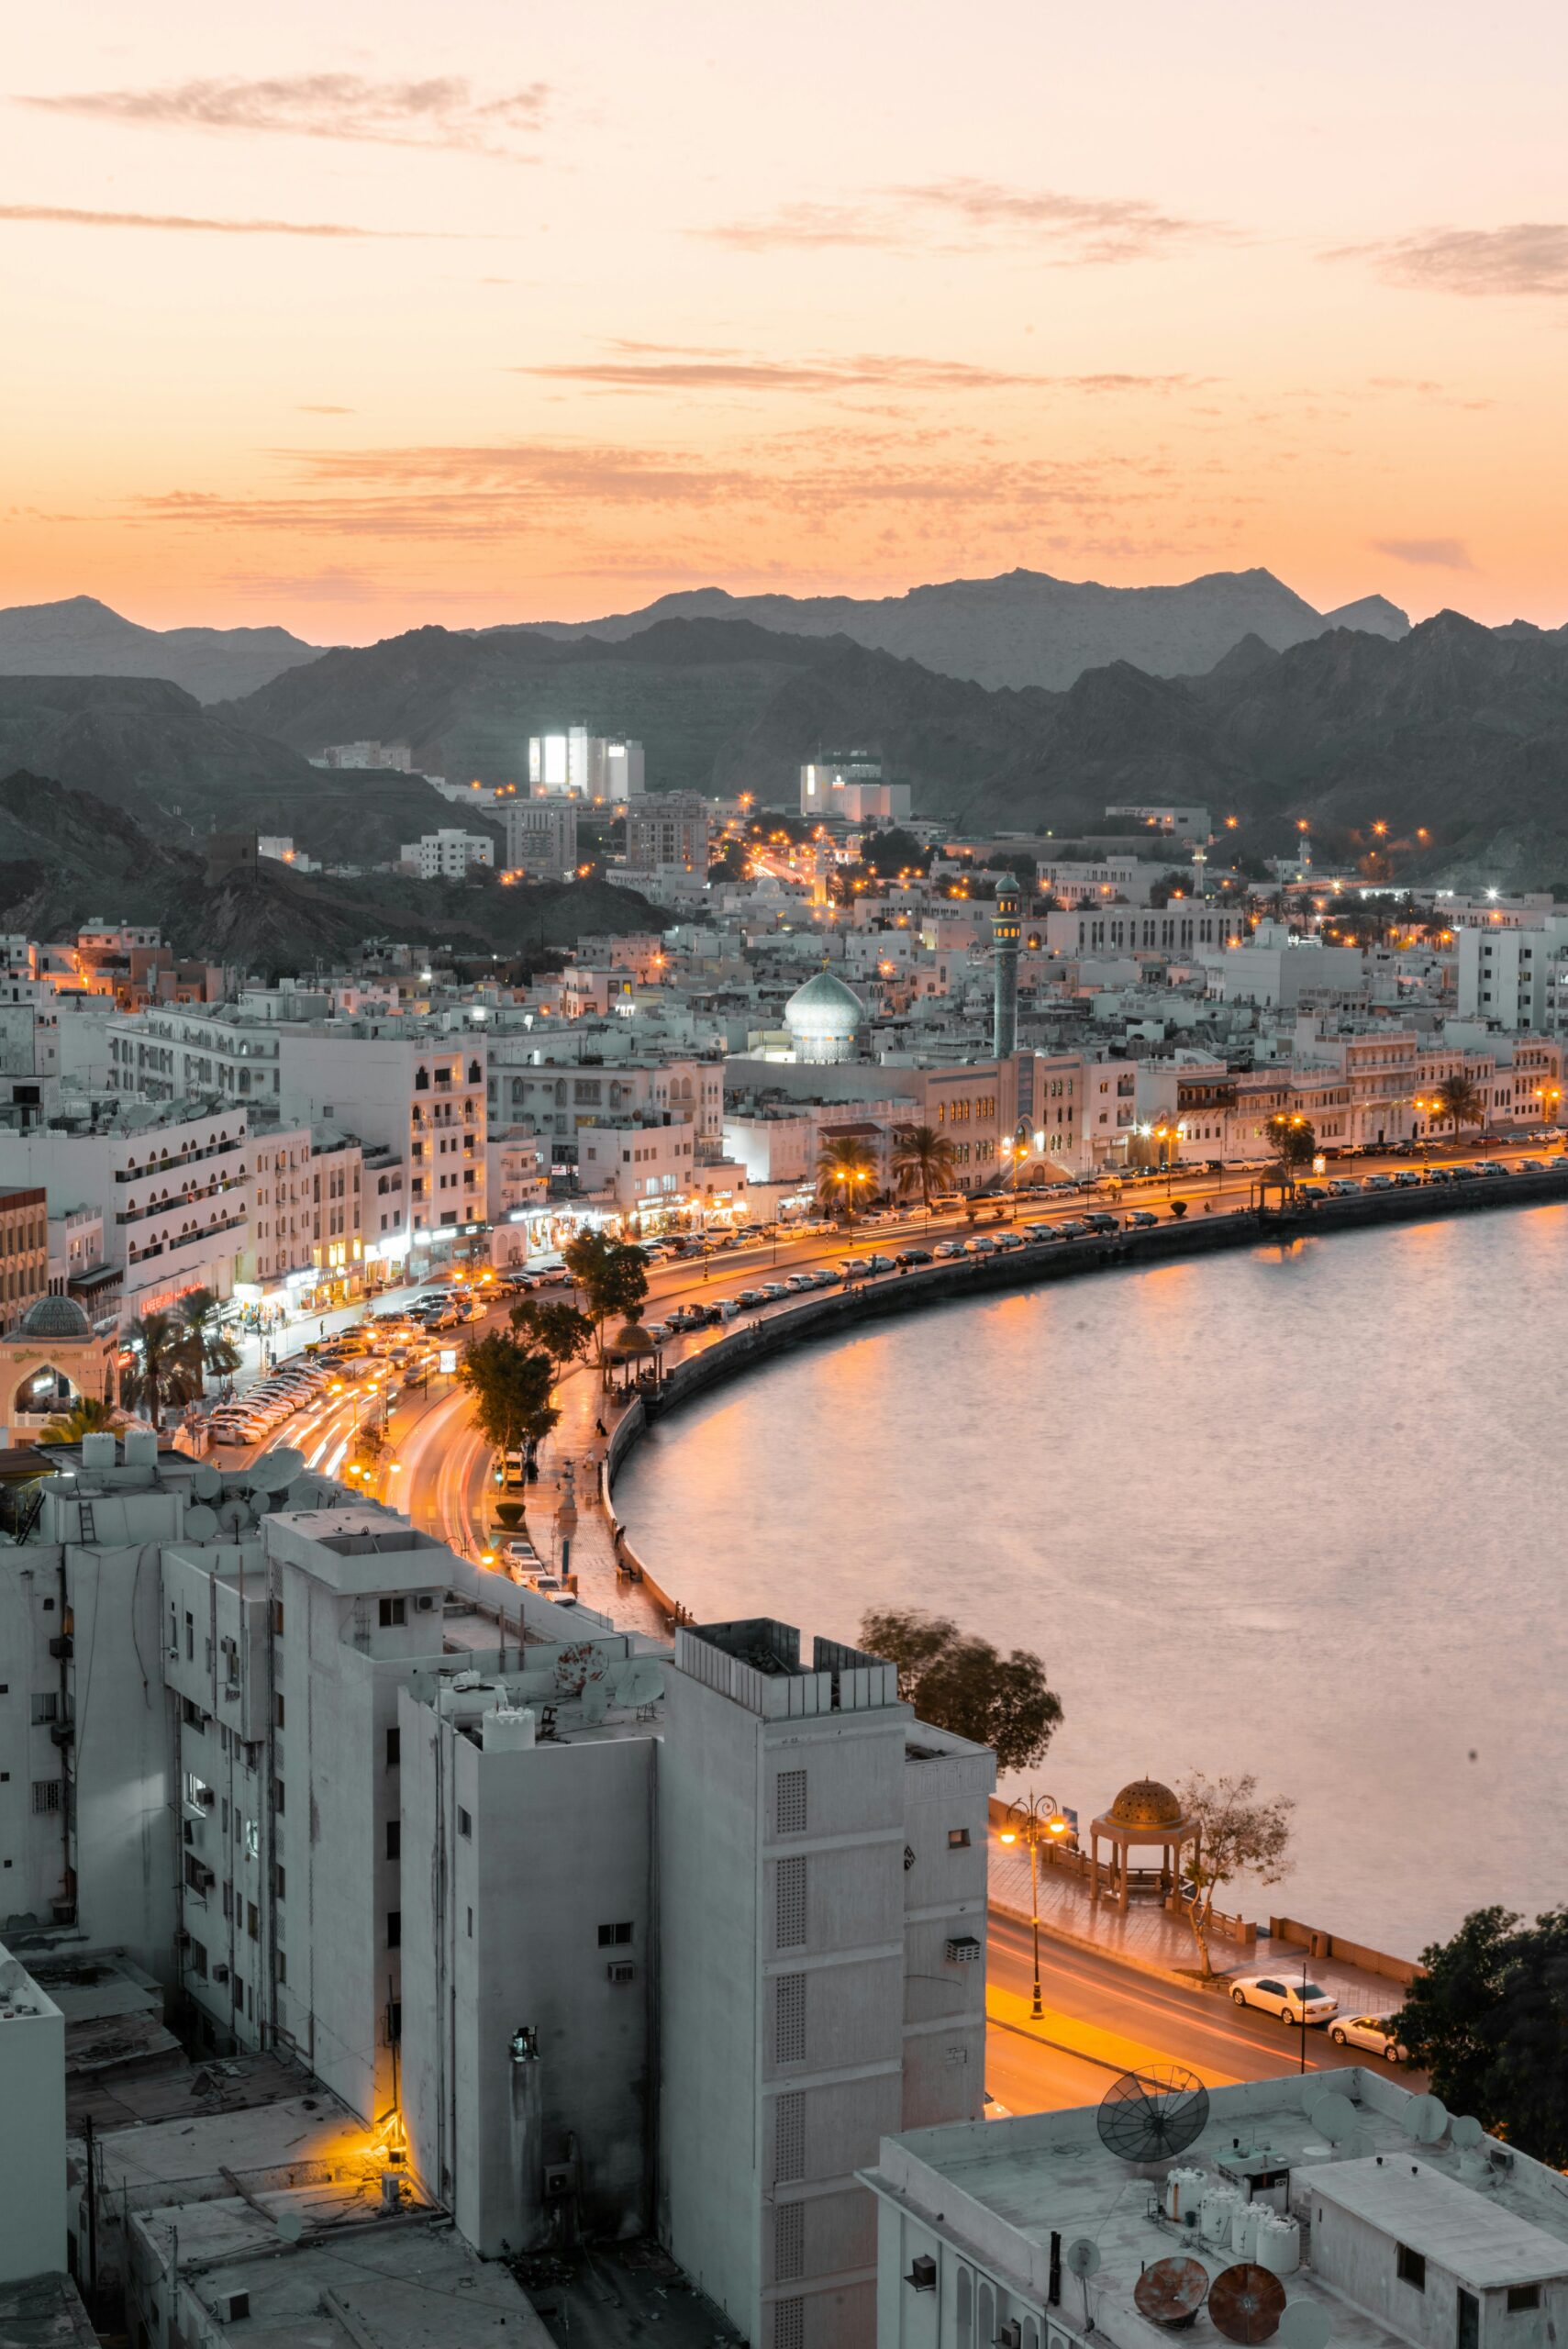 Salalah Free Zone, a key player in Oman's economic landscape